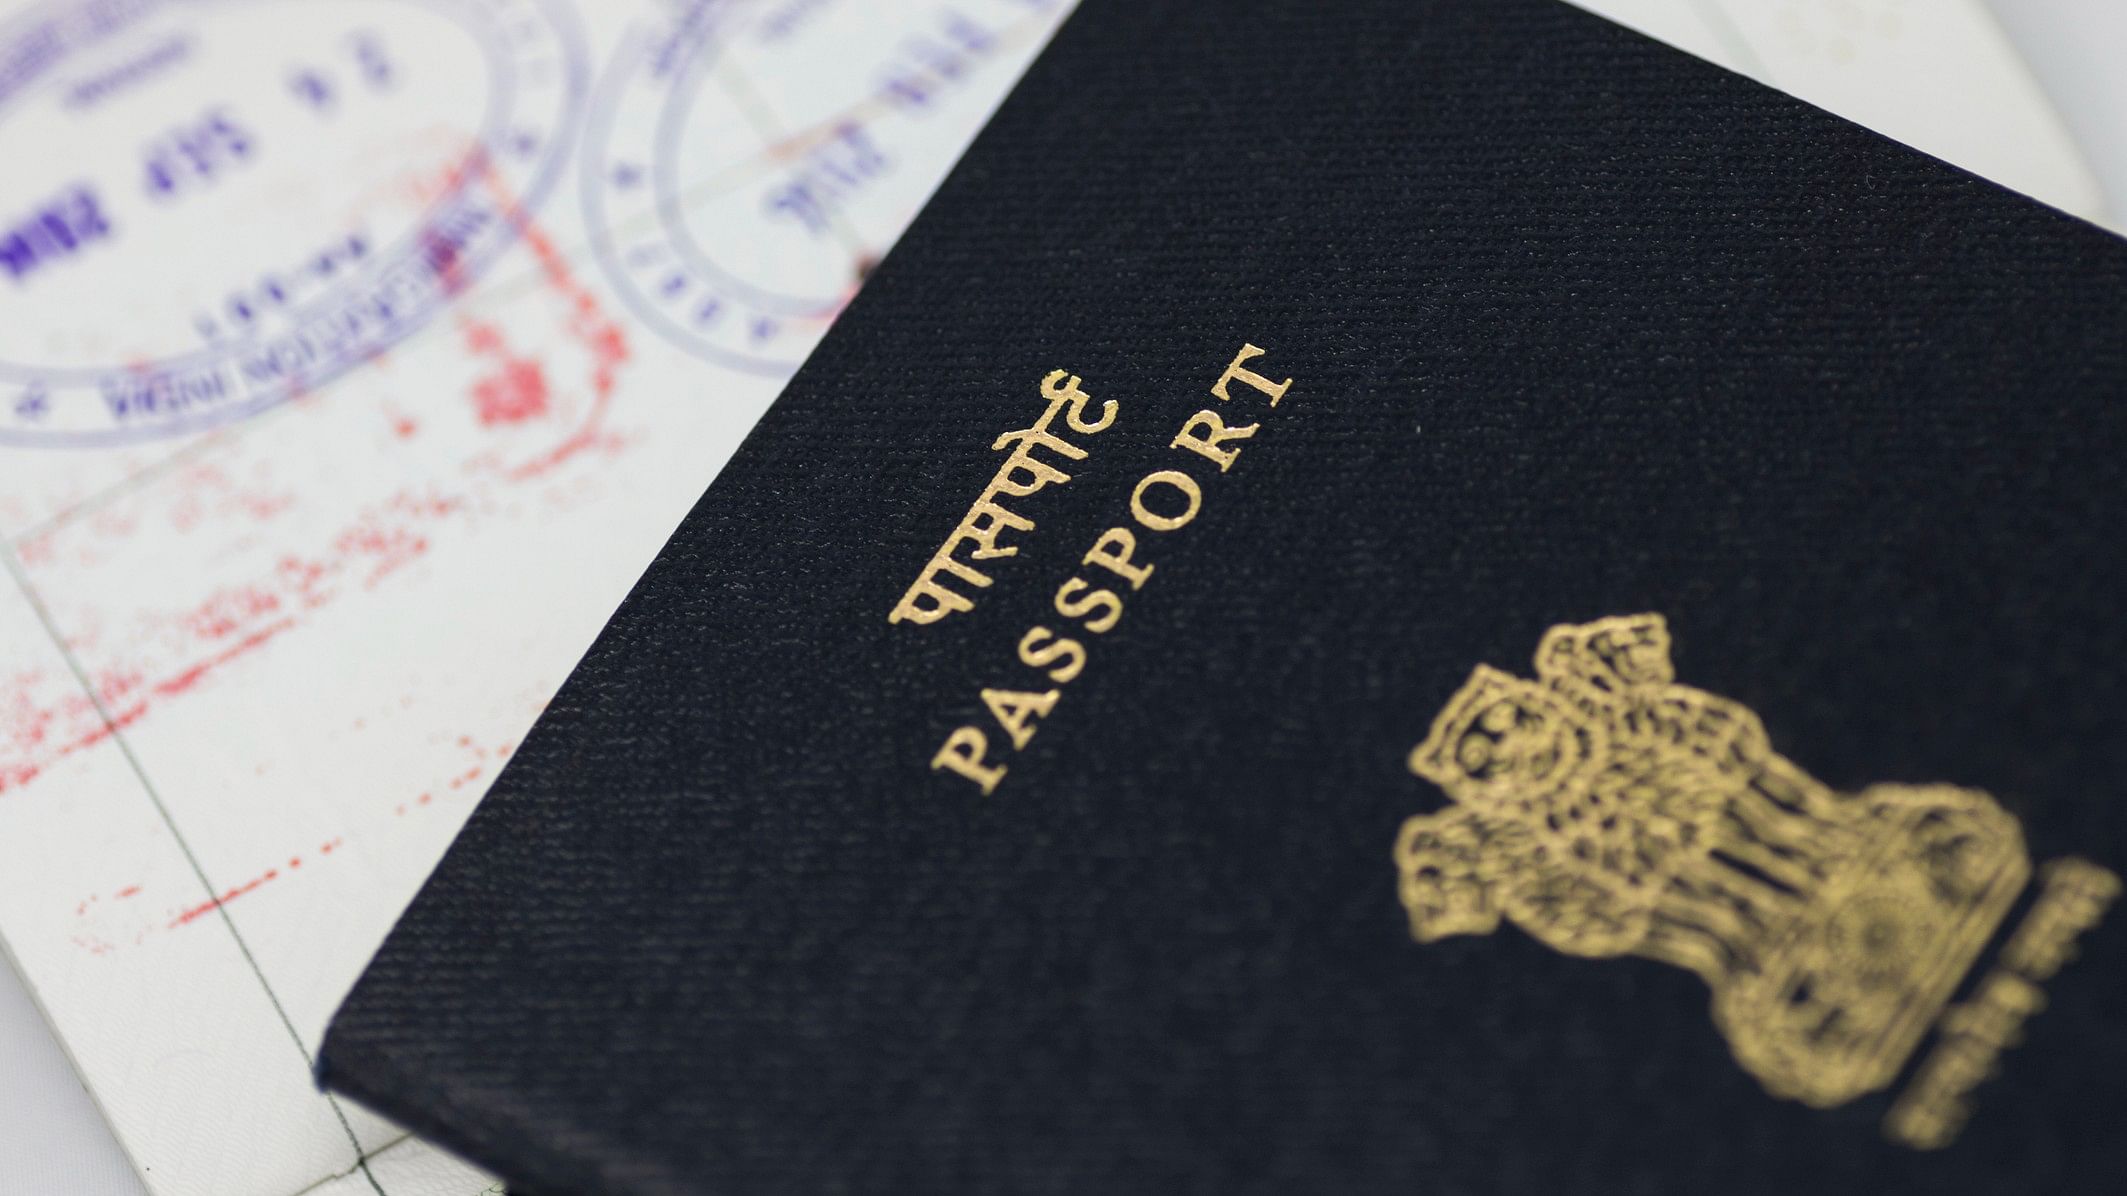 <div class="paragraphs"><p>Representative image showing Indian Passport.</p></div>